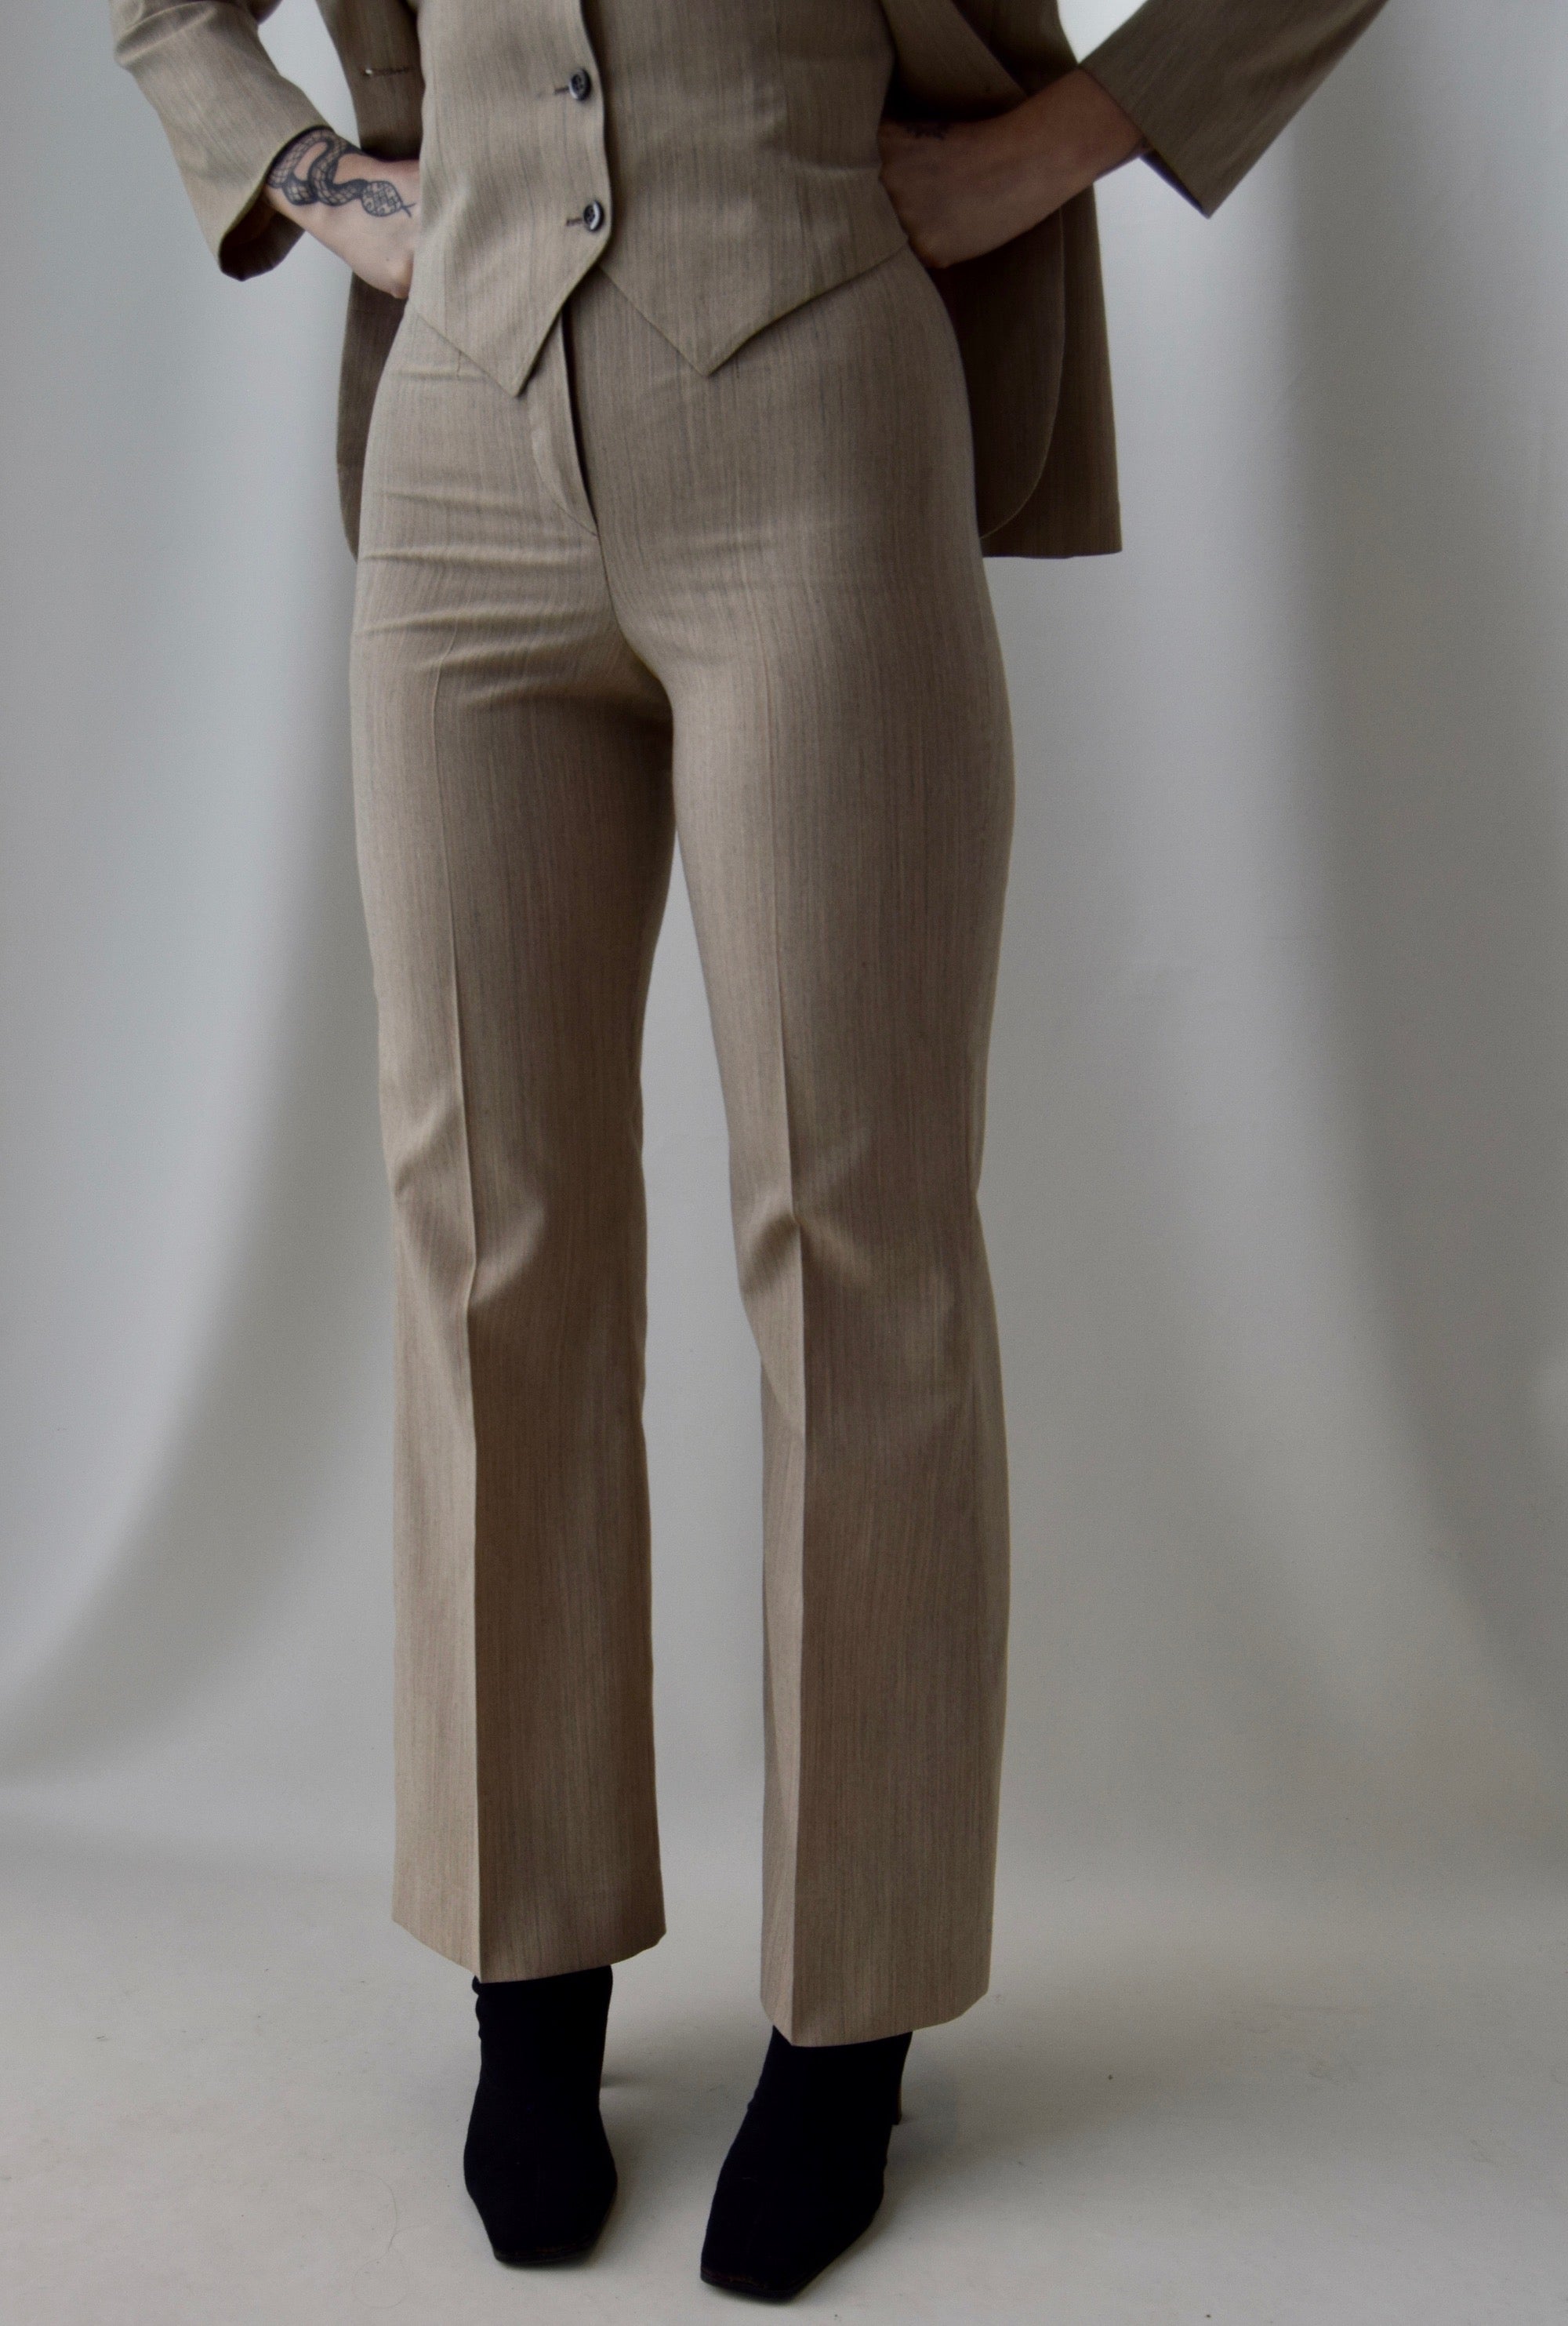 1970's Three Piece Tan Pin Stripe Ladies Wool Suit